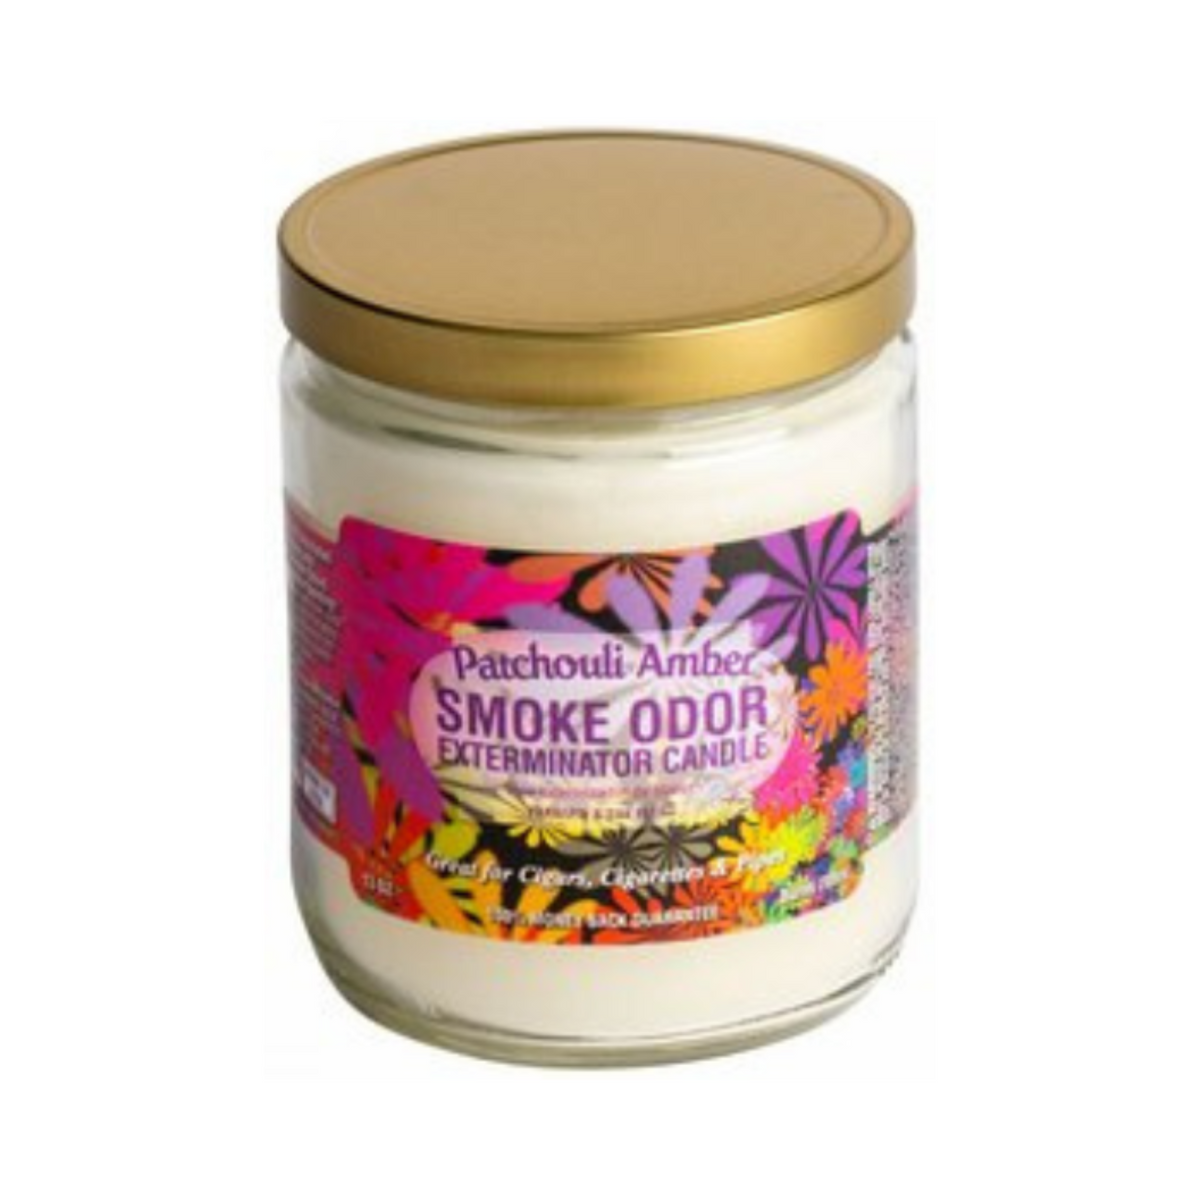 Smoke Odor Exterminator Candle - PATCHOULI AMBER